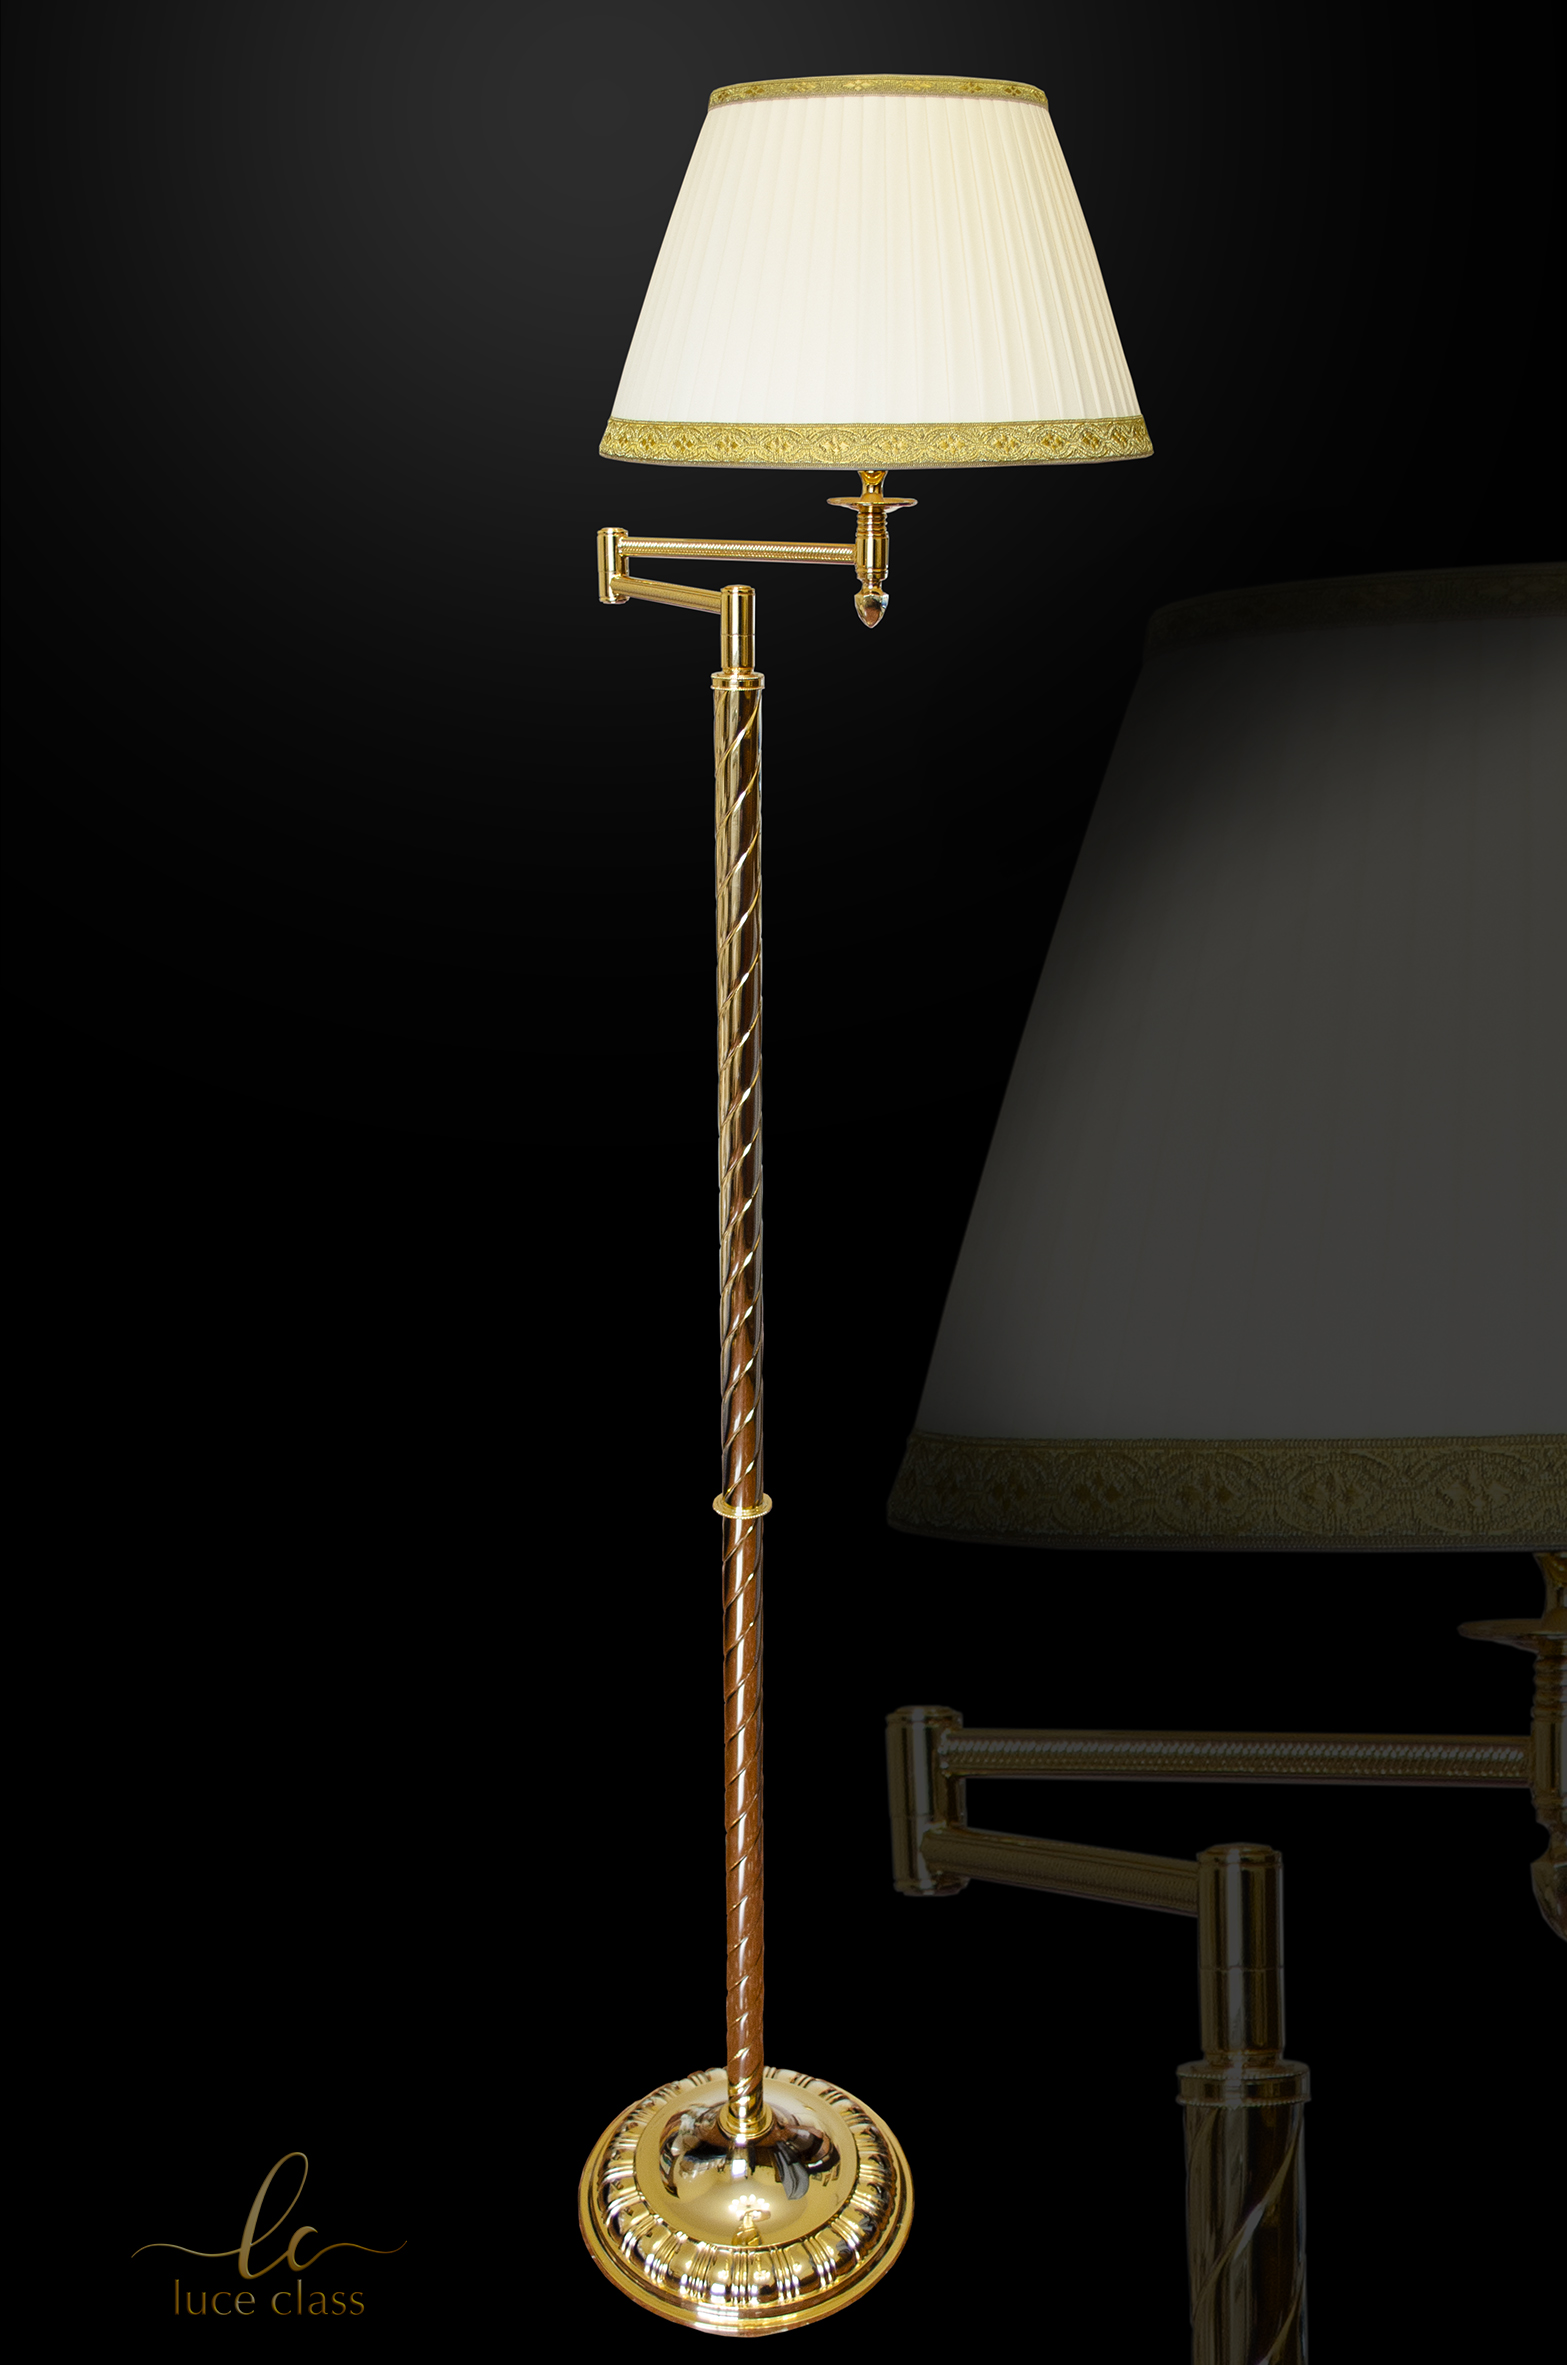 Piantana snodo lampada da terra classica braccio a snodo ottone con  paralume plissè